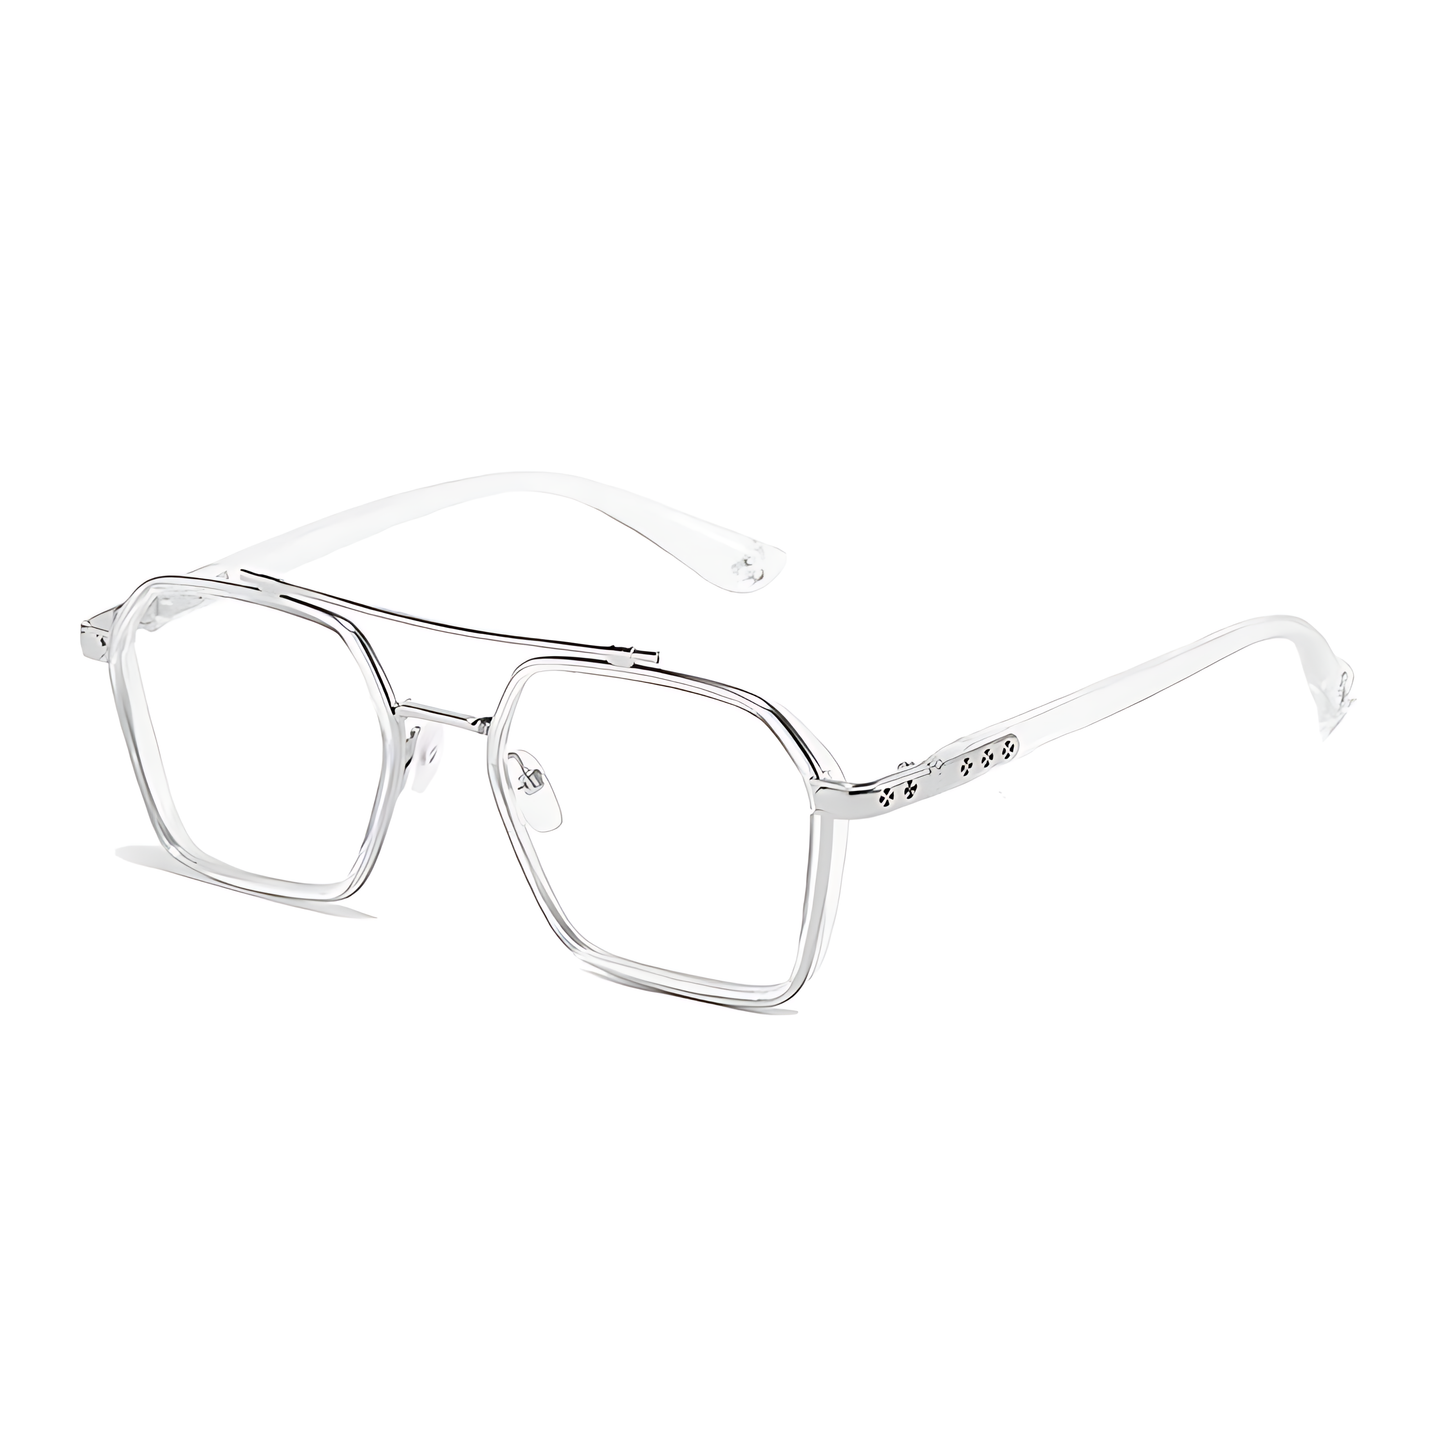 Clear Lens Eyewear Glasses: Square Frame and Blue Light Defense